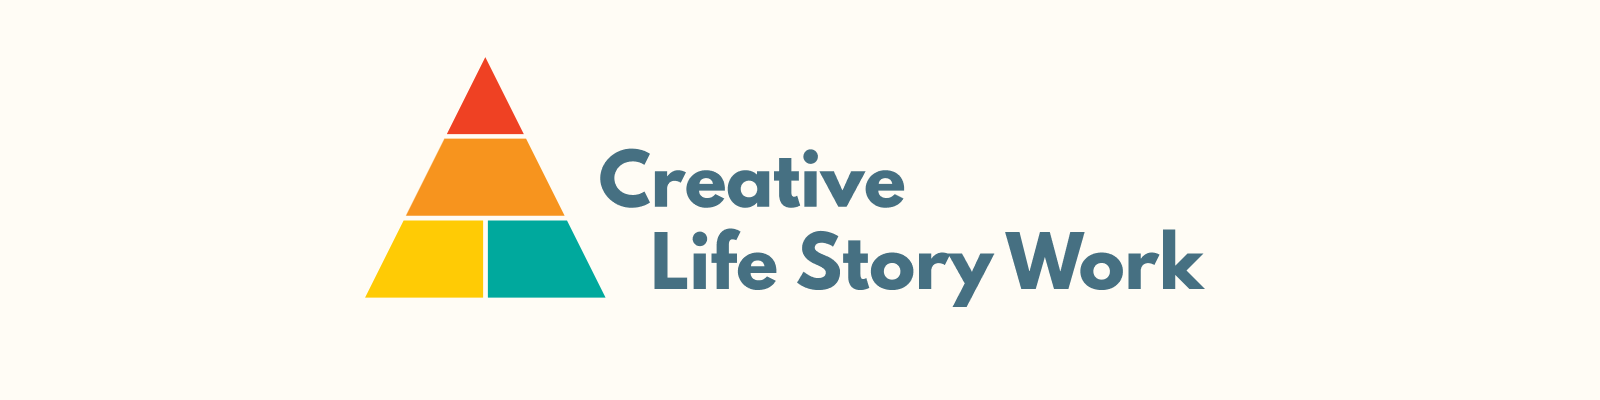 Creative life story work logo